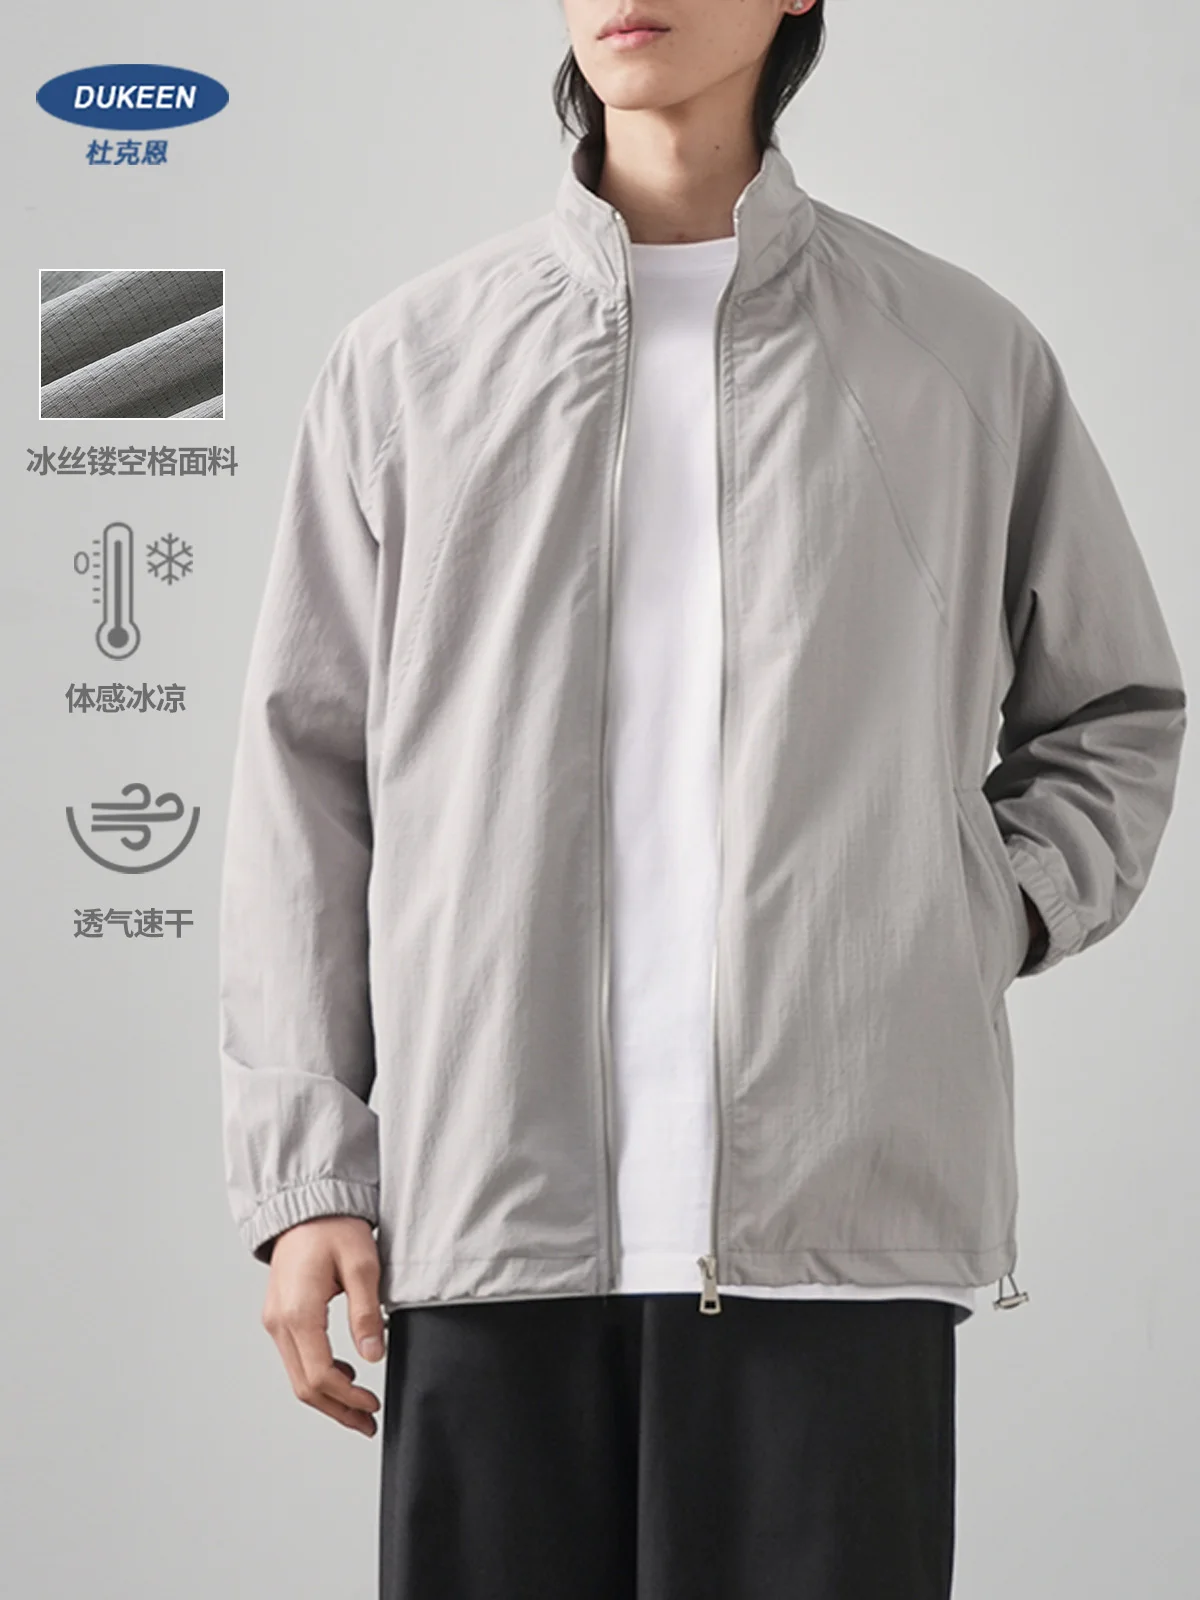 

DUKEEN M-3Xl Men's Jacket Summer Thin Long Sleeve Outdoor Sports Quick-Drying Jacket Solid Zipper Casual Sunscreen Clothing